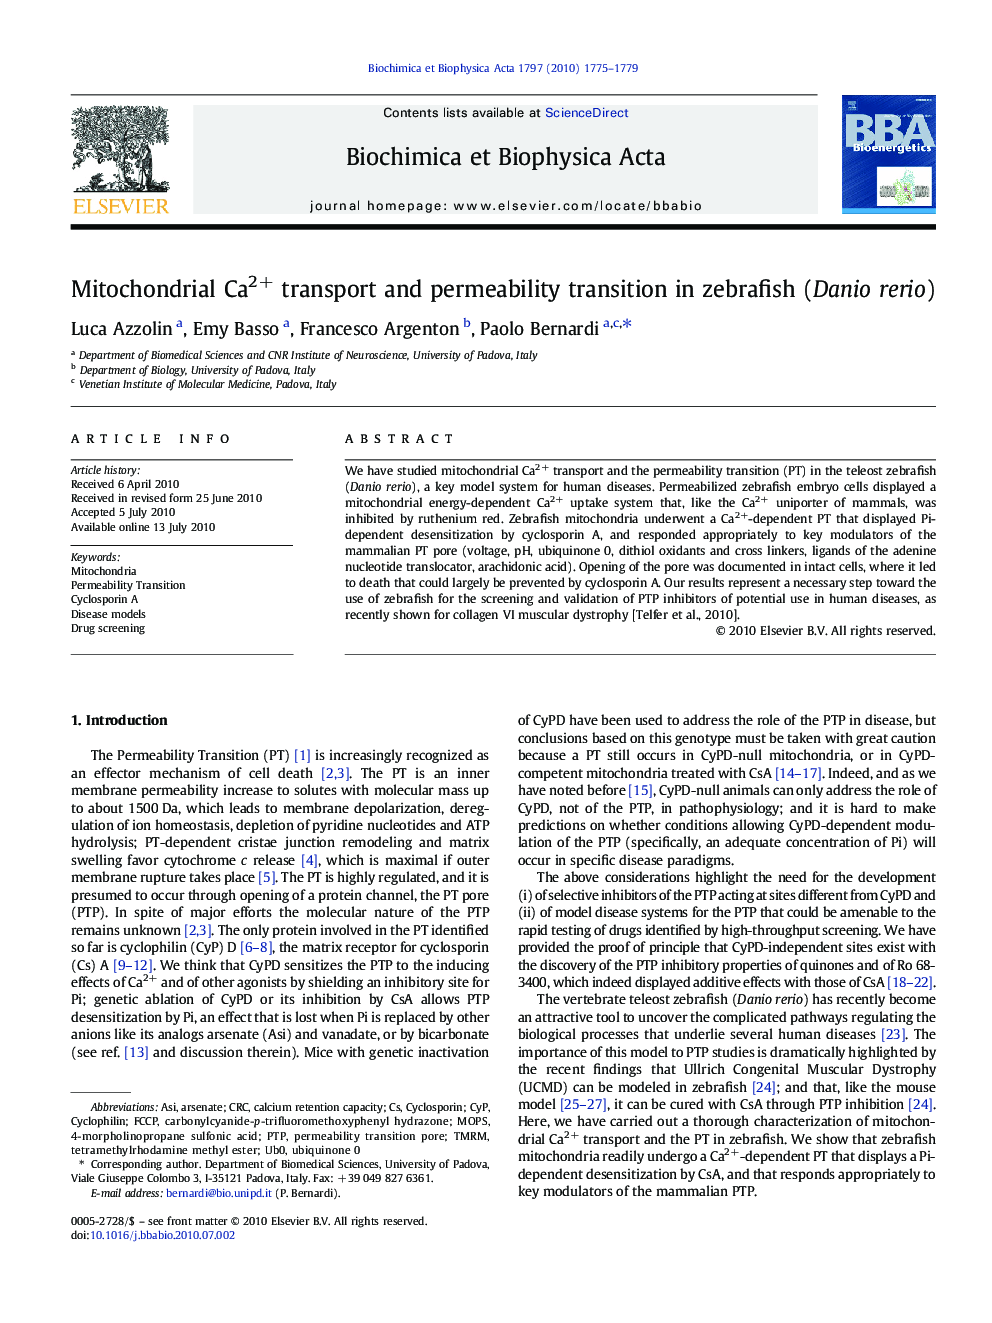 Mitochondrial Ca2+ transport and permeability transition in zebrafish (Danio rerio)